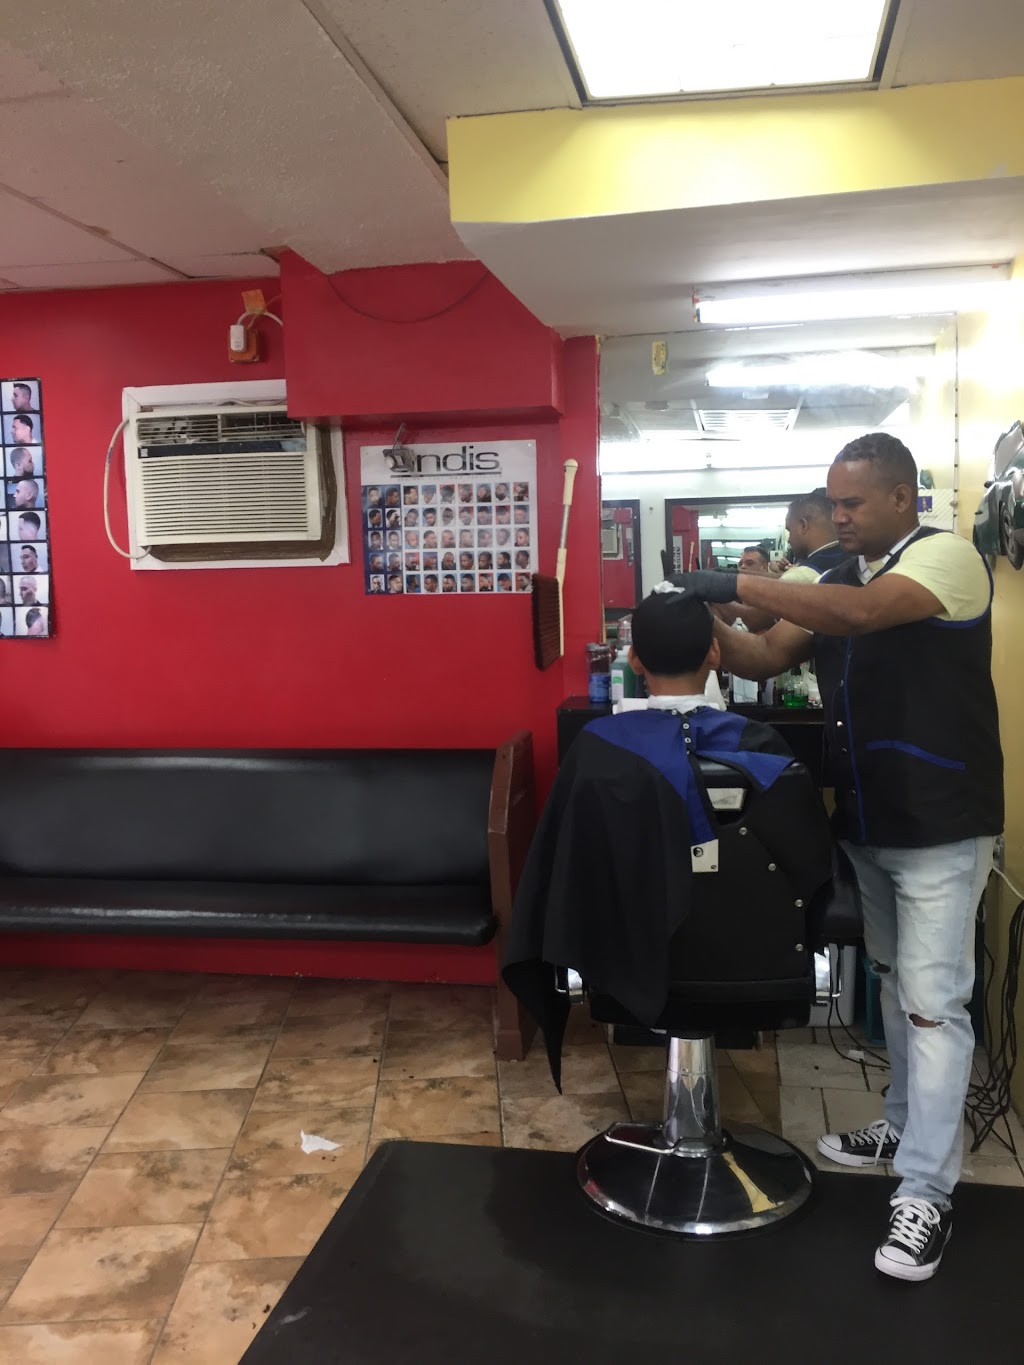 Primos Barber Shop | 902 Morton St, Boston, MA 02126 | Phone: (857) 312-4409